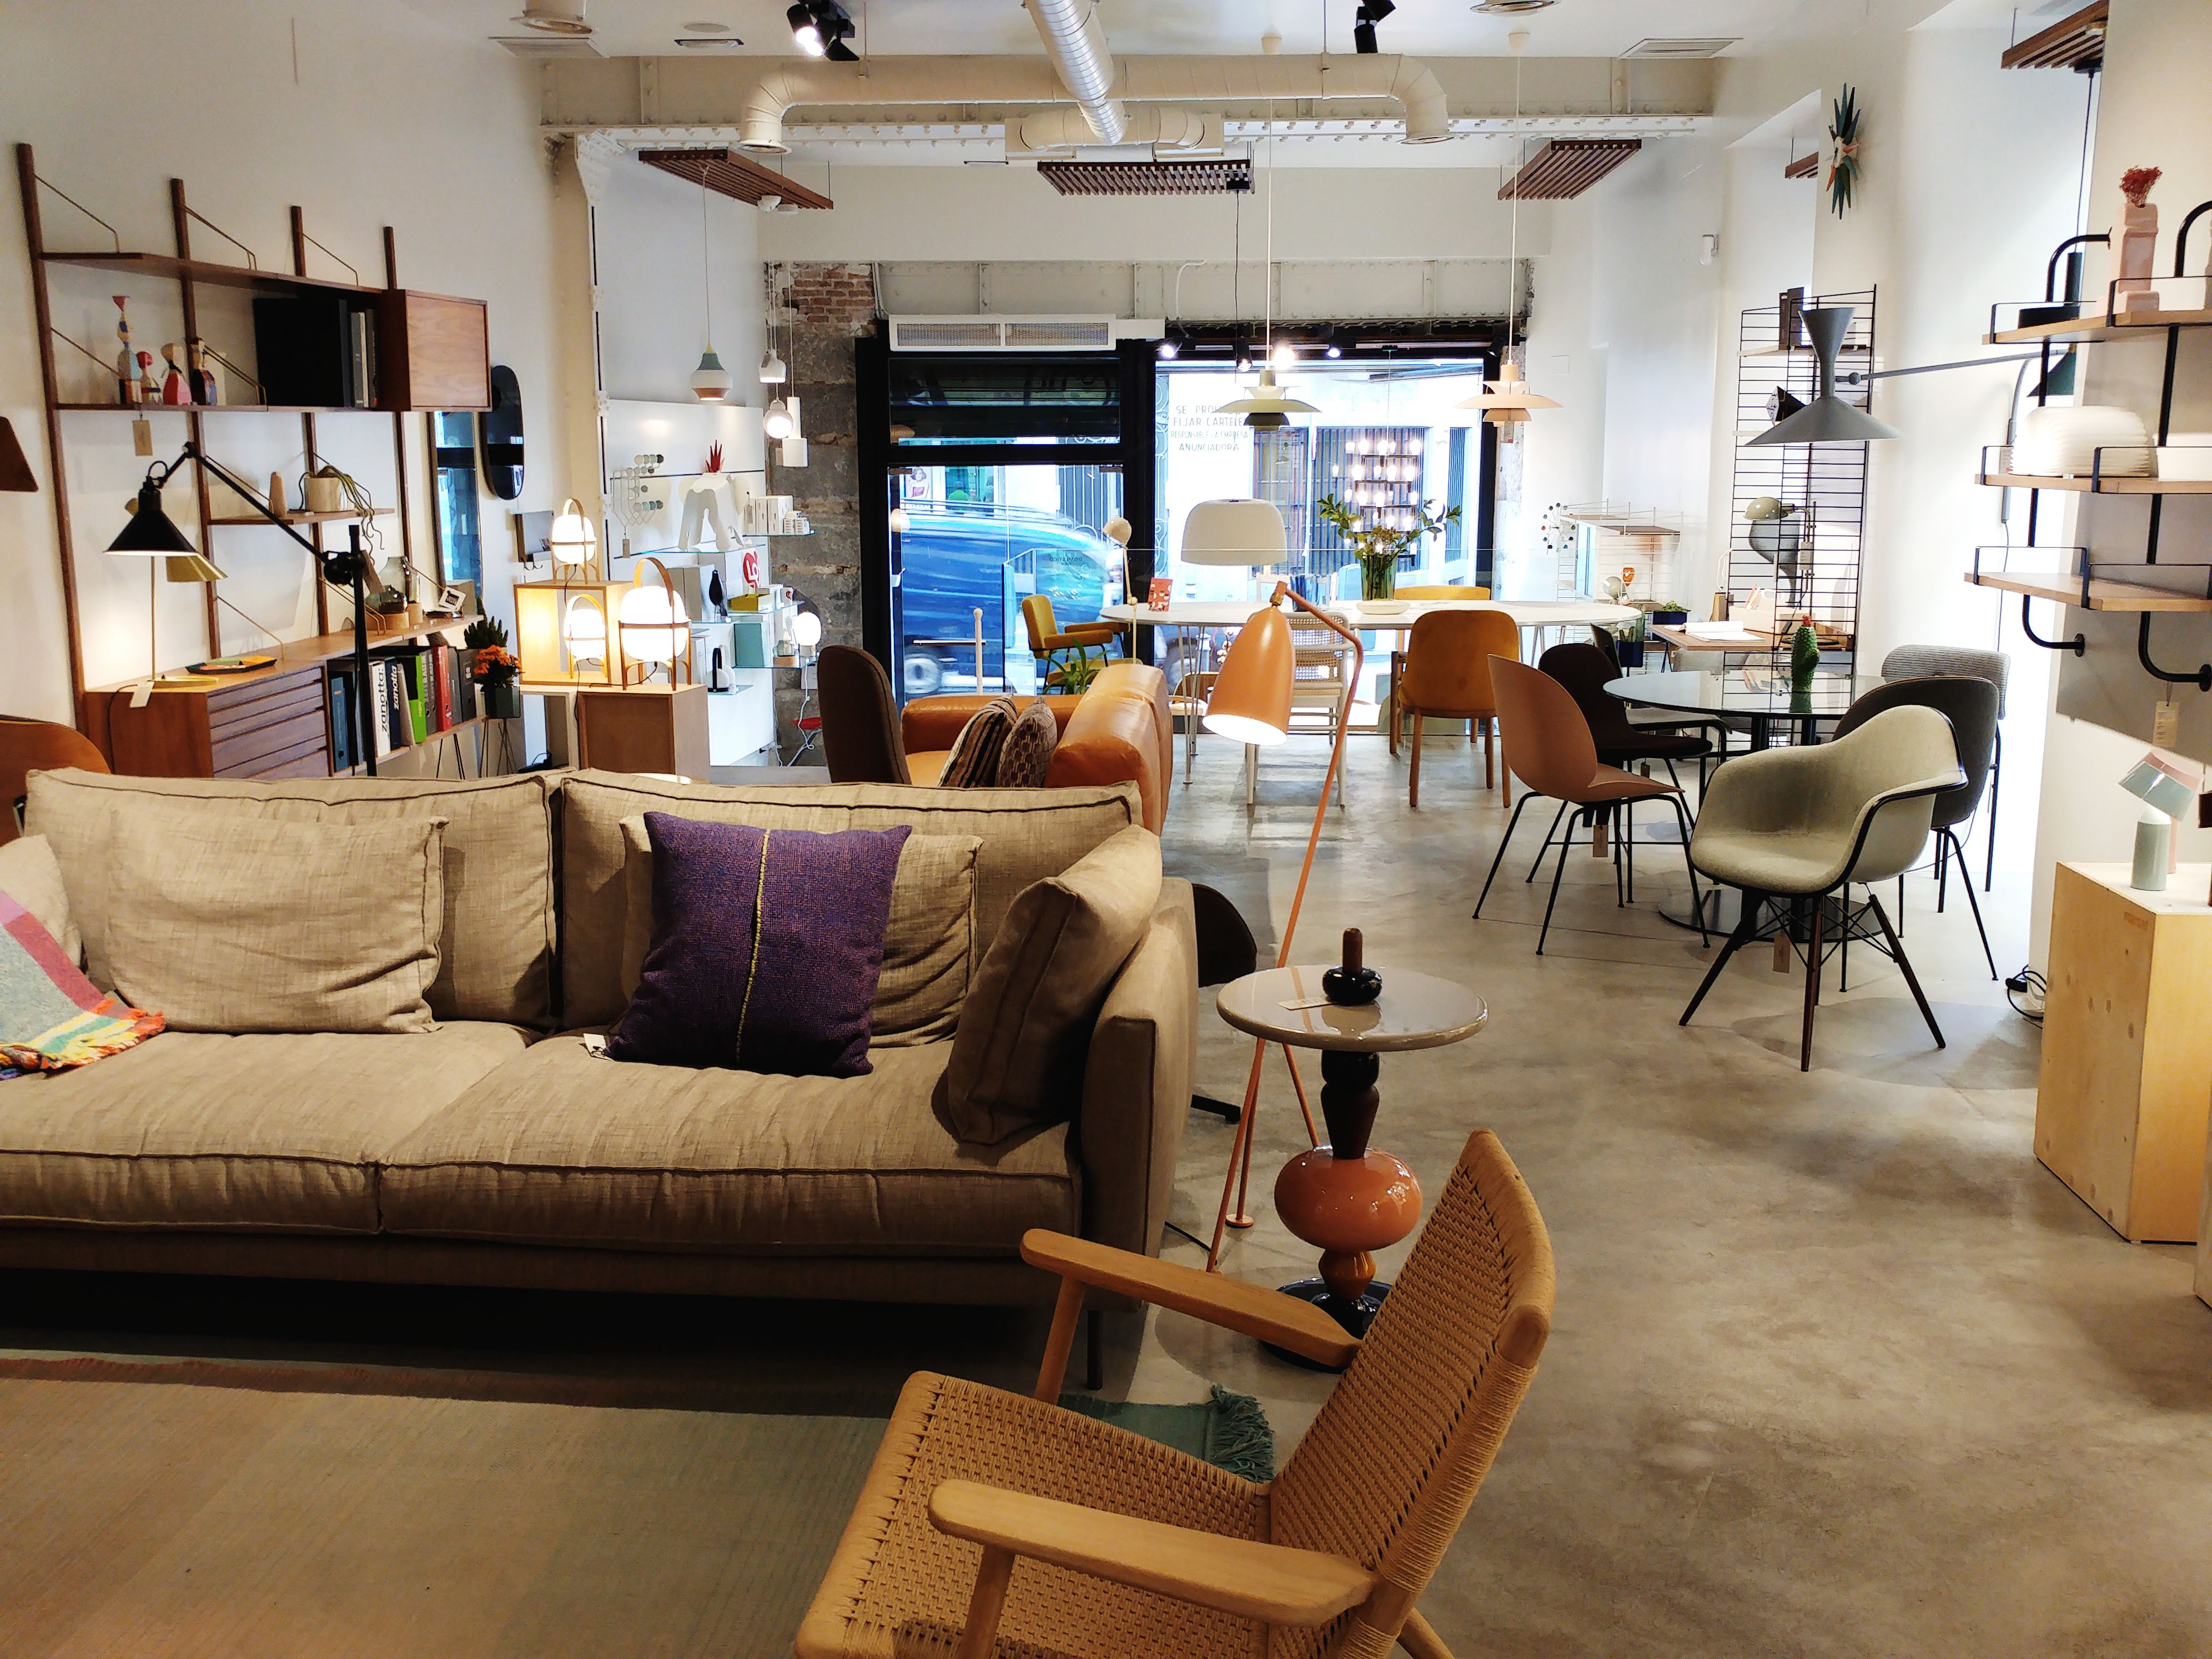 DomésticoShop upscale furniture shop in Madrid´s Chueca